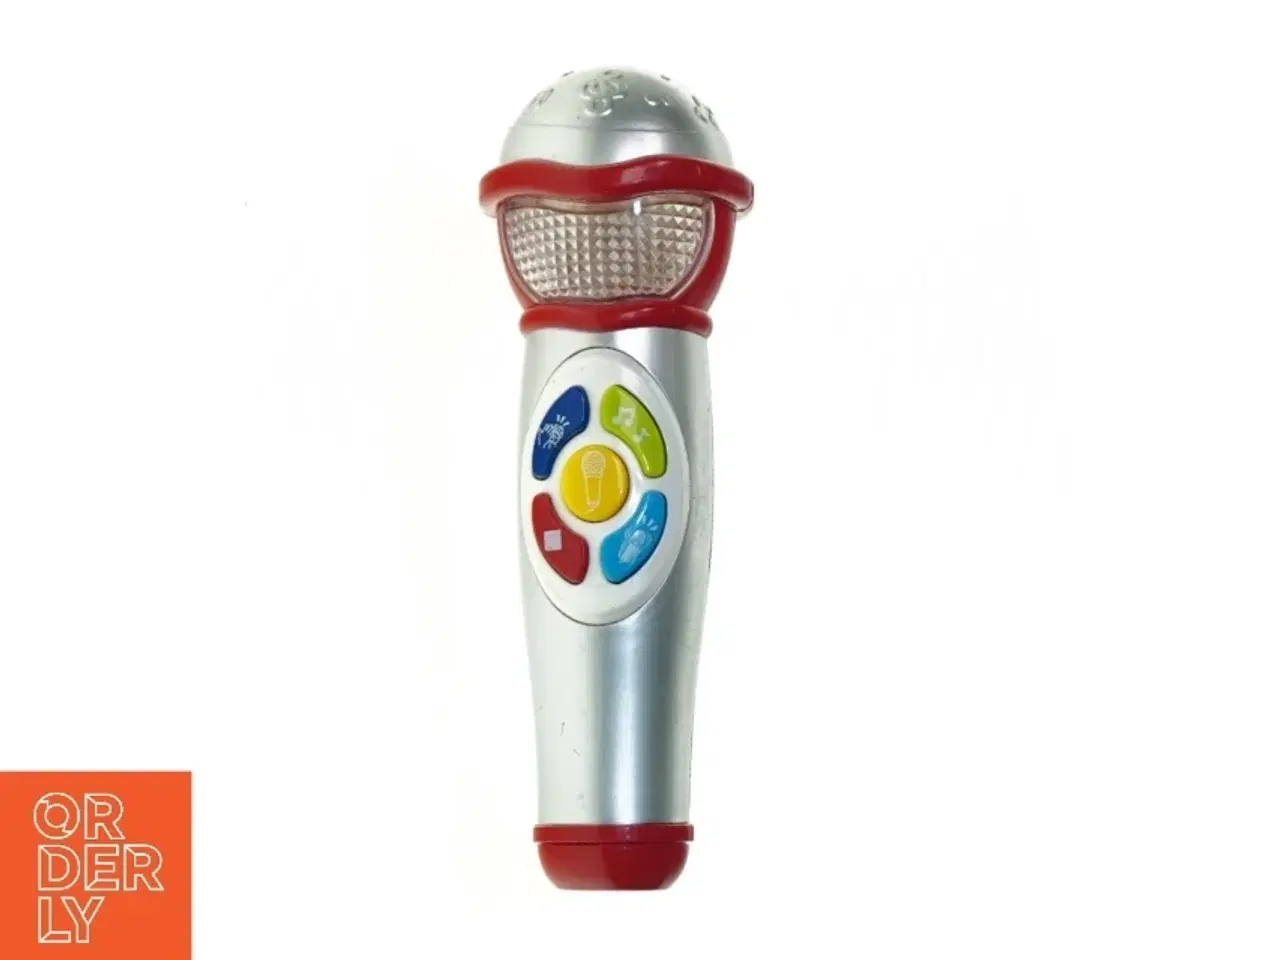 Billede 1 - Mikrofon fra Top Toy (str. 20 x 6 cm)